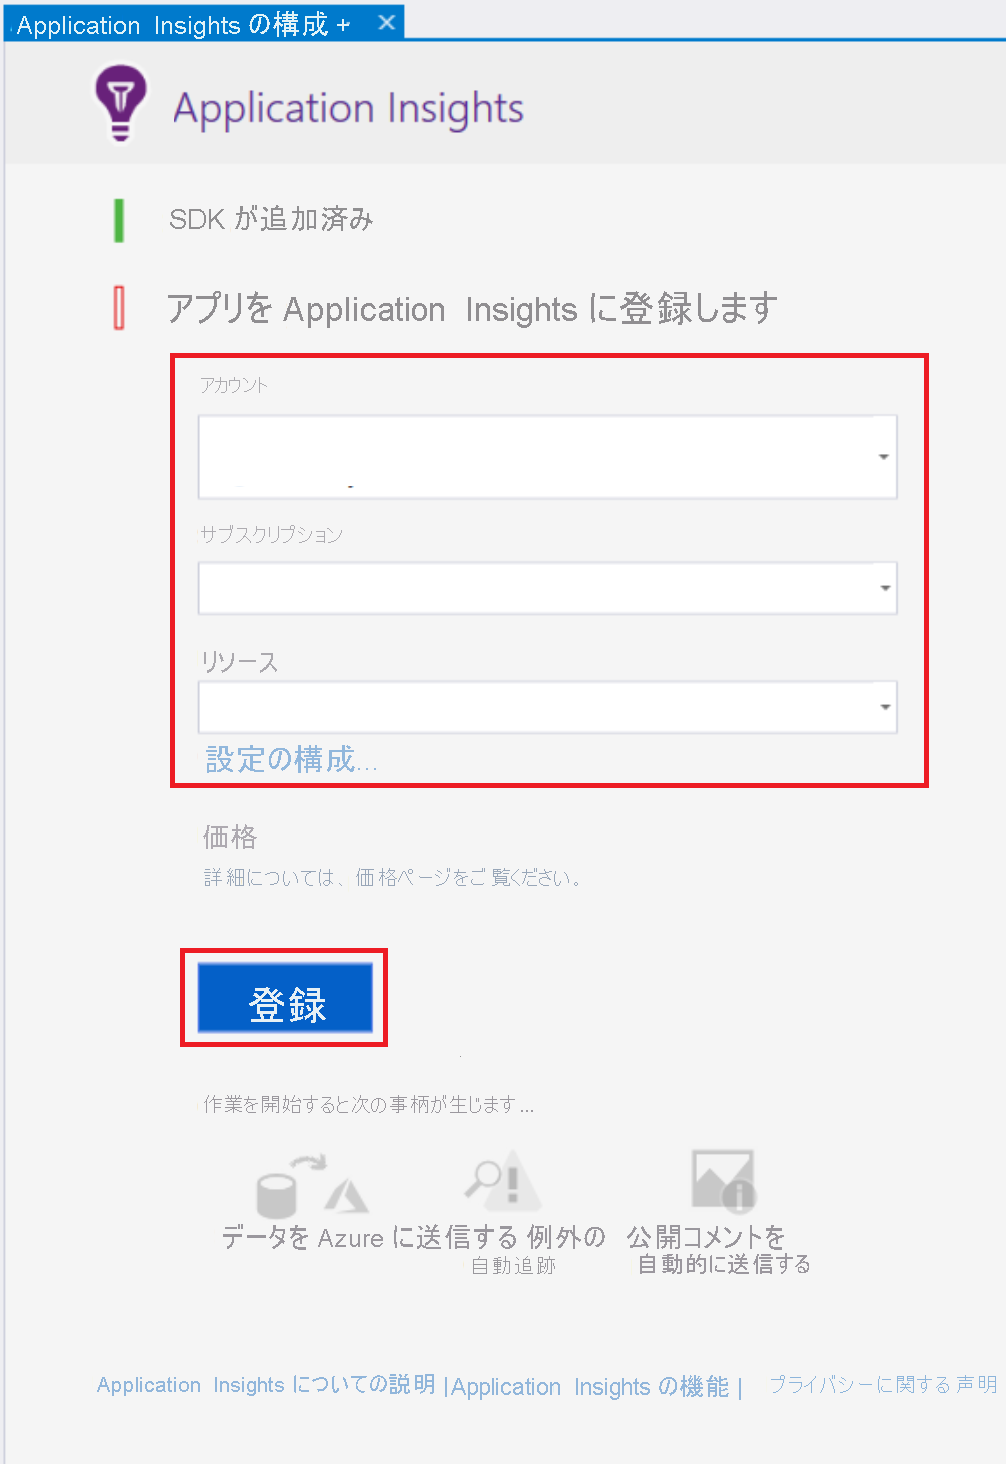 Application Insights の登録方法を示すスクリーンショット。